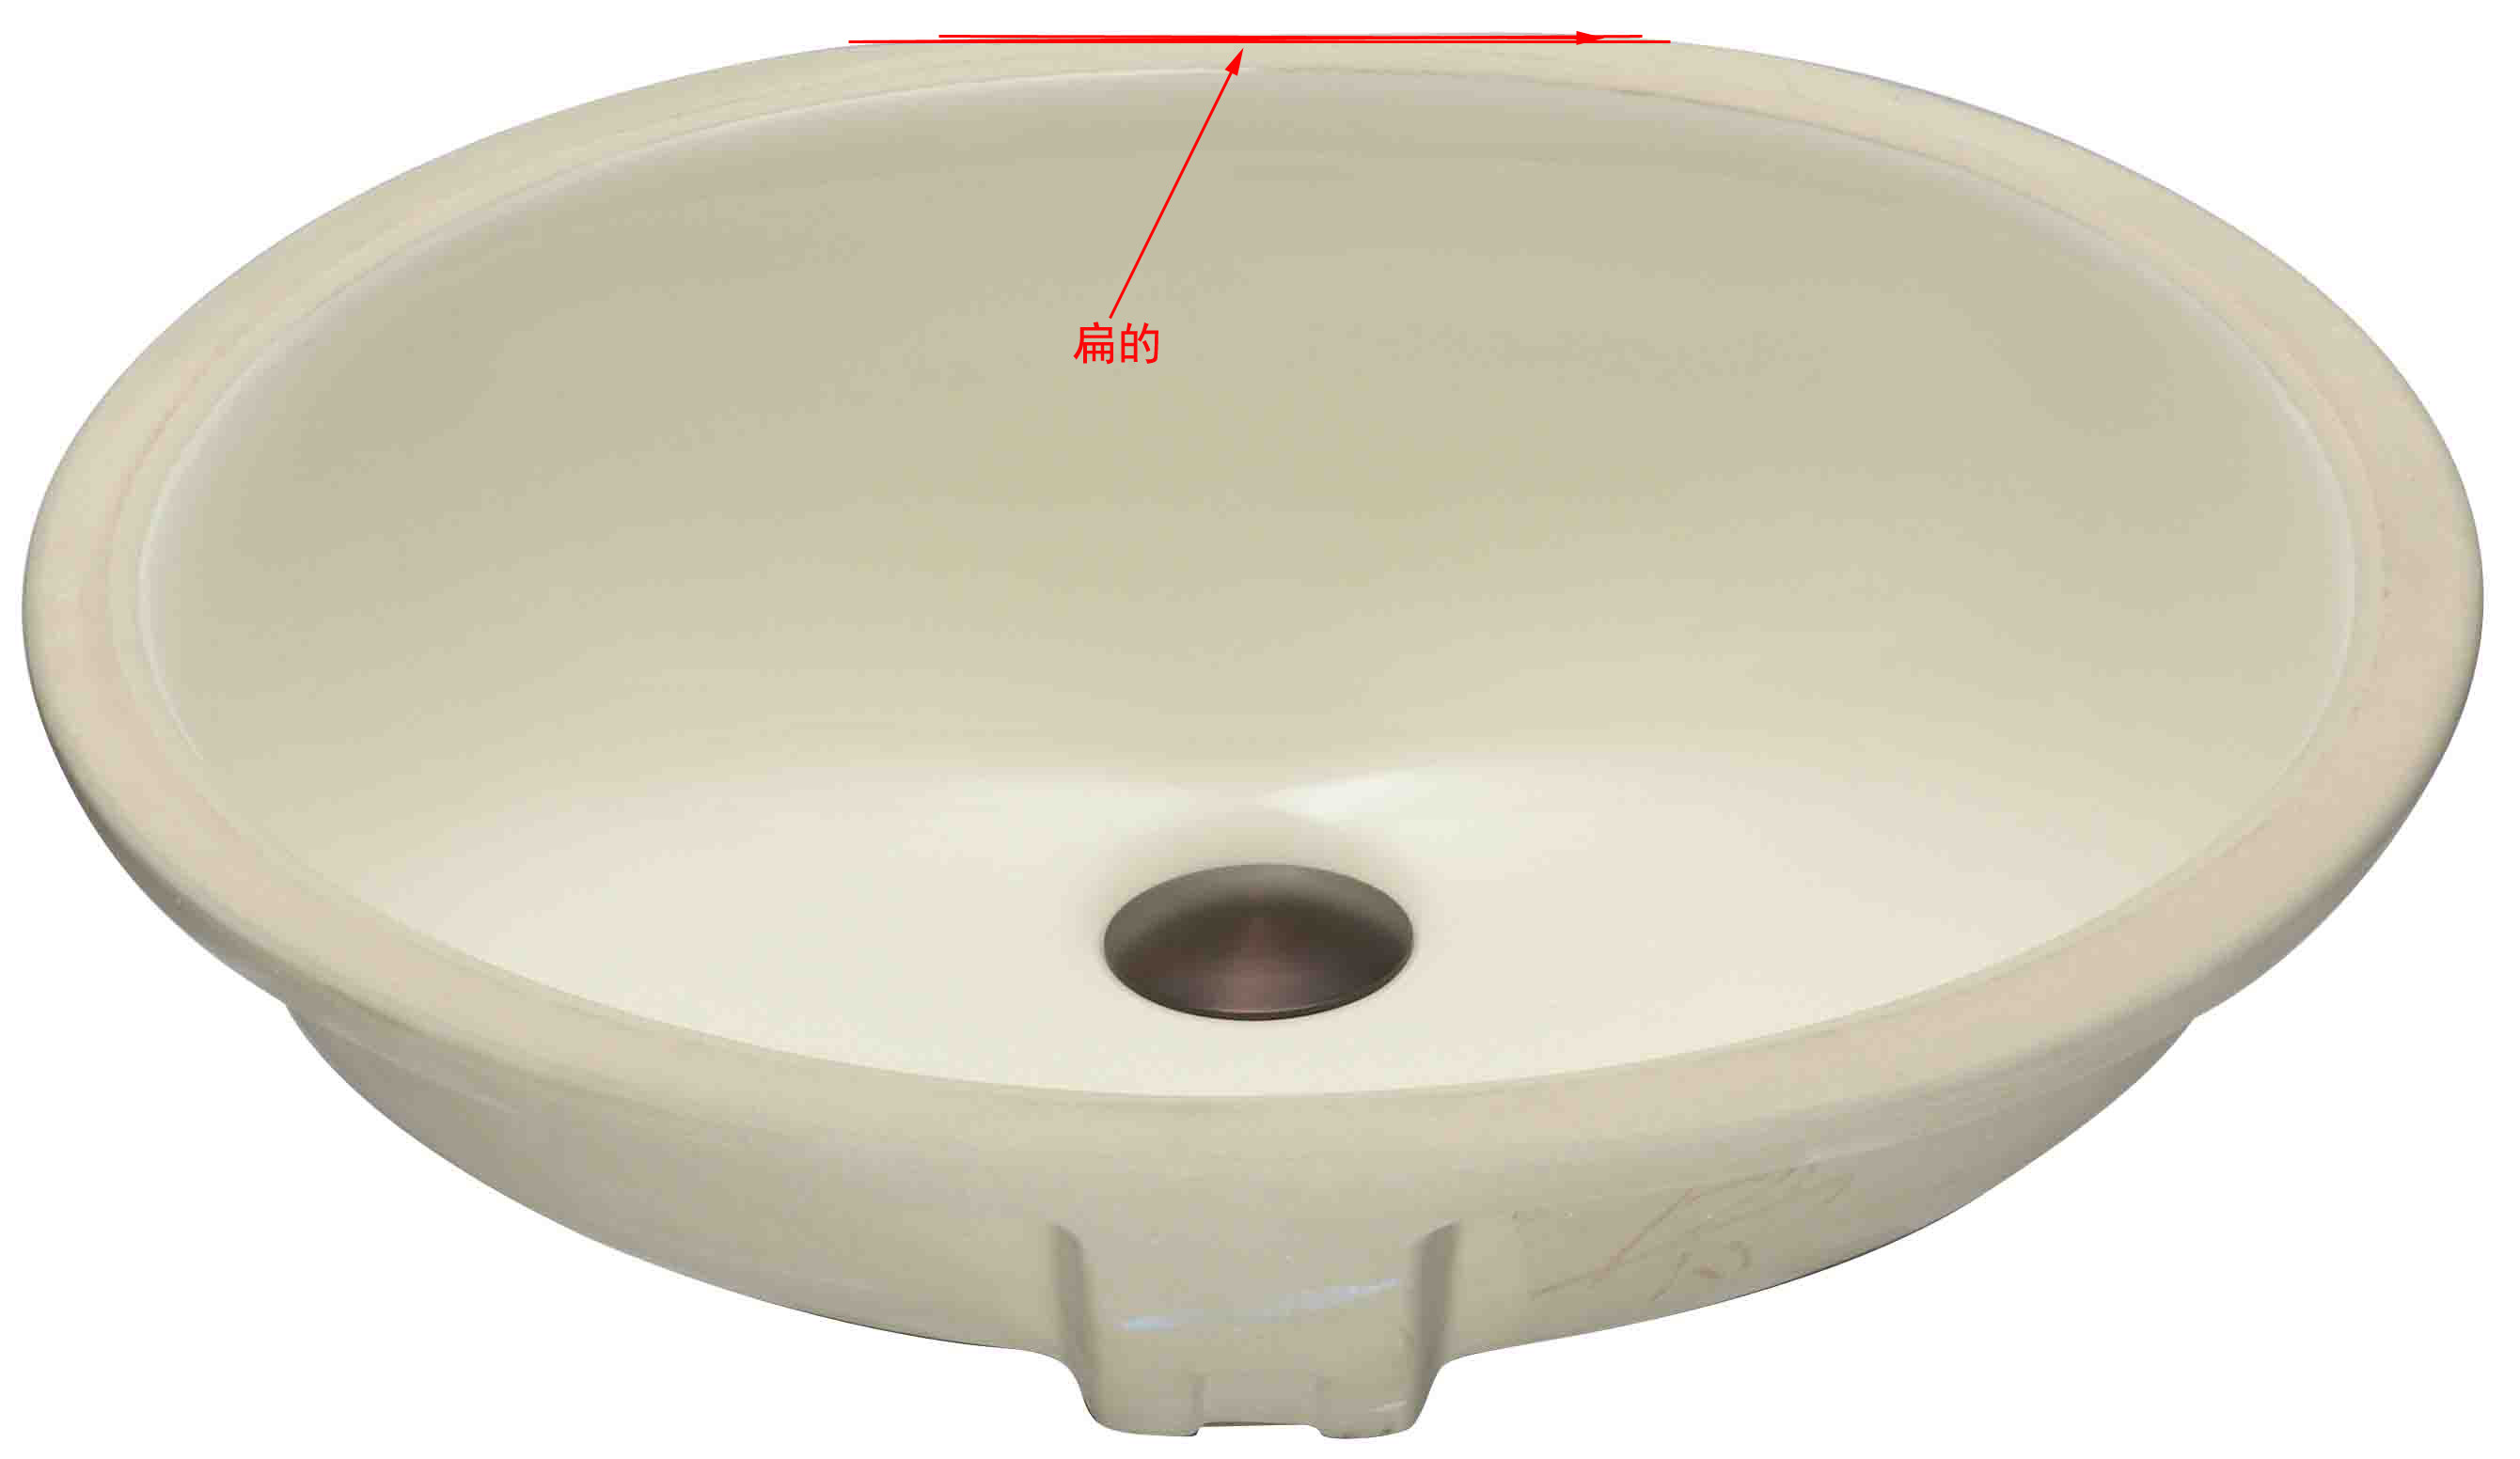 Lenova PU-901BQ Bisque Oval Porcelain Undermount Sink 19 3/8 X 15 3/4 X 6